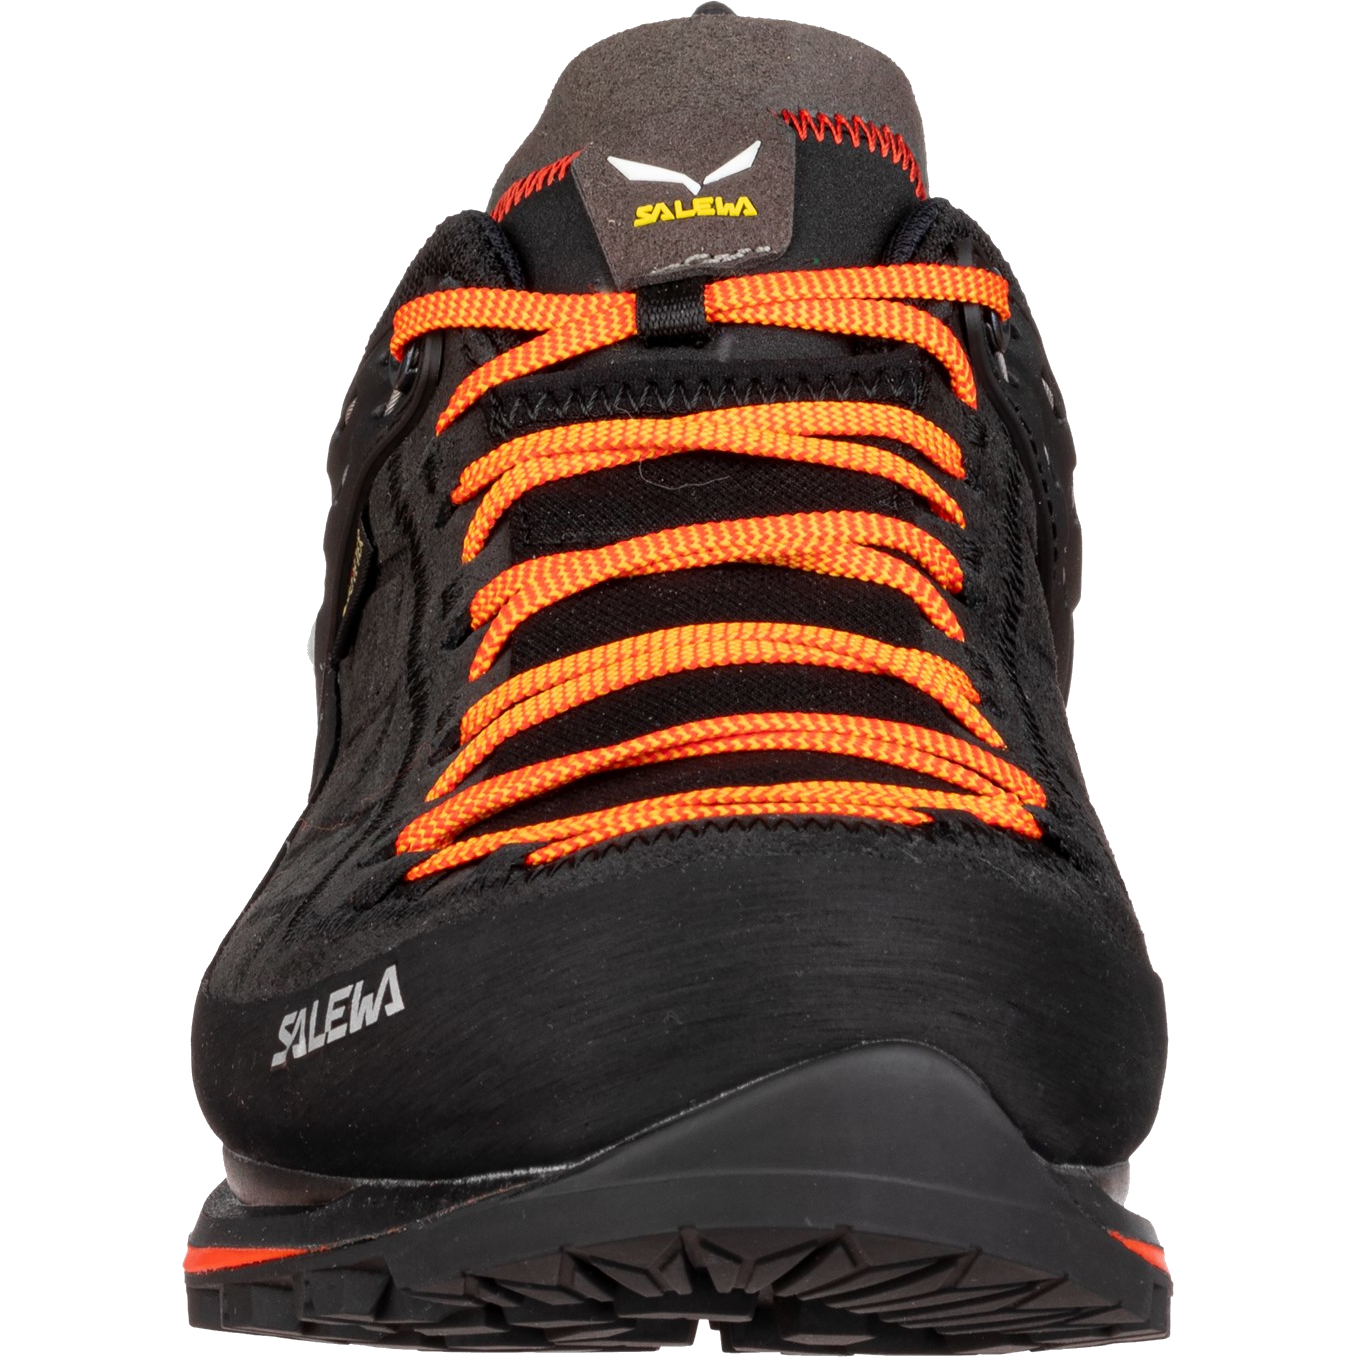 Mountain Trainer 2 Winter GORE-TEX® Men's Shoes